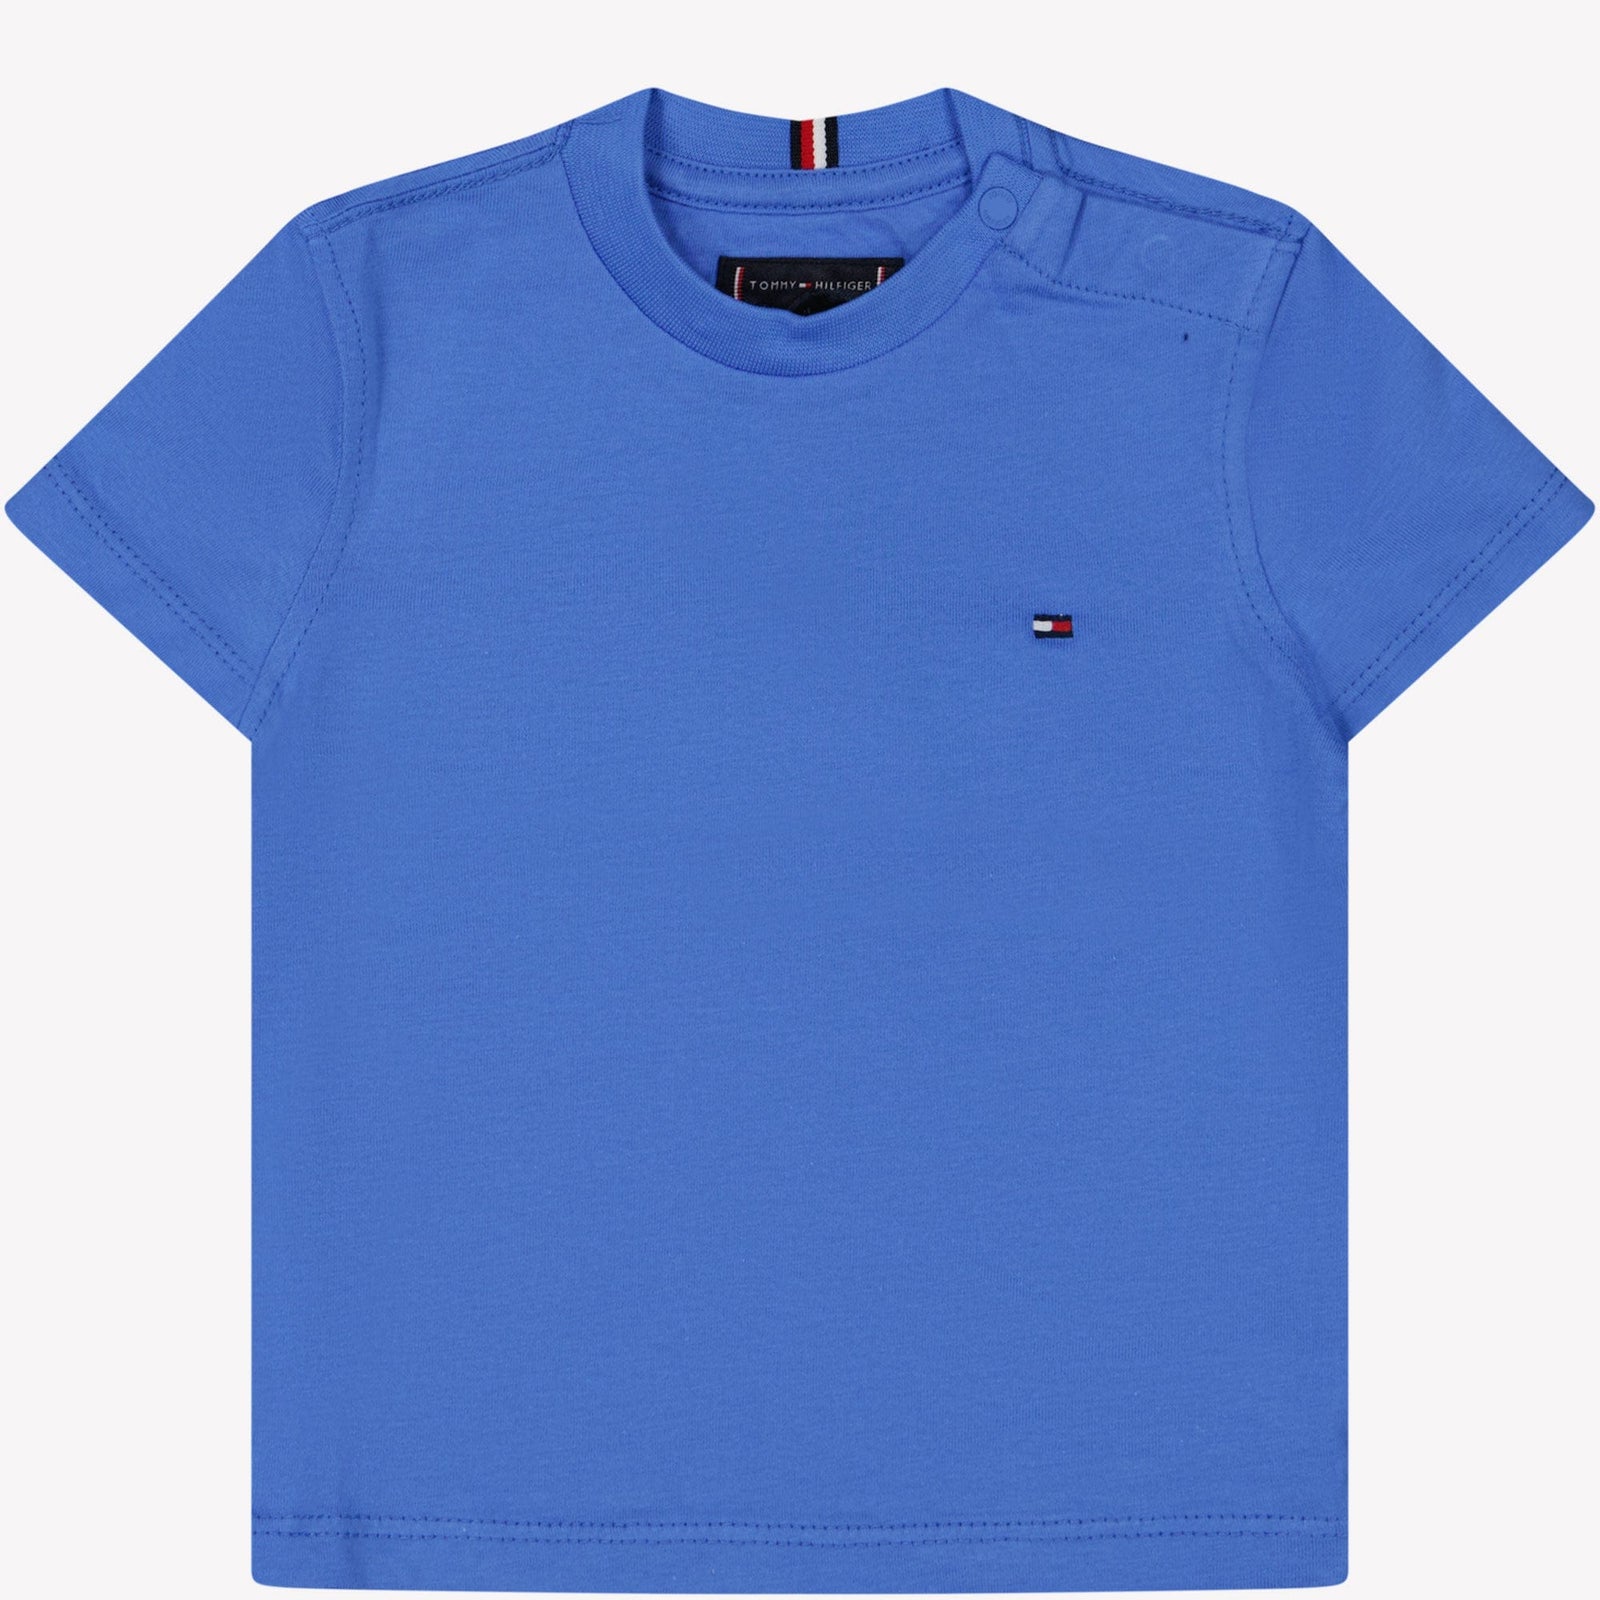 Tommy Hilfiger Baby Jongens T-shirt Blauw 74